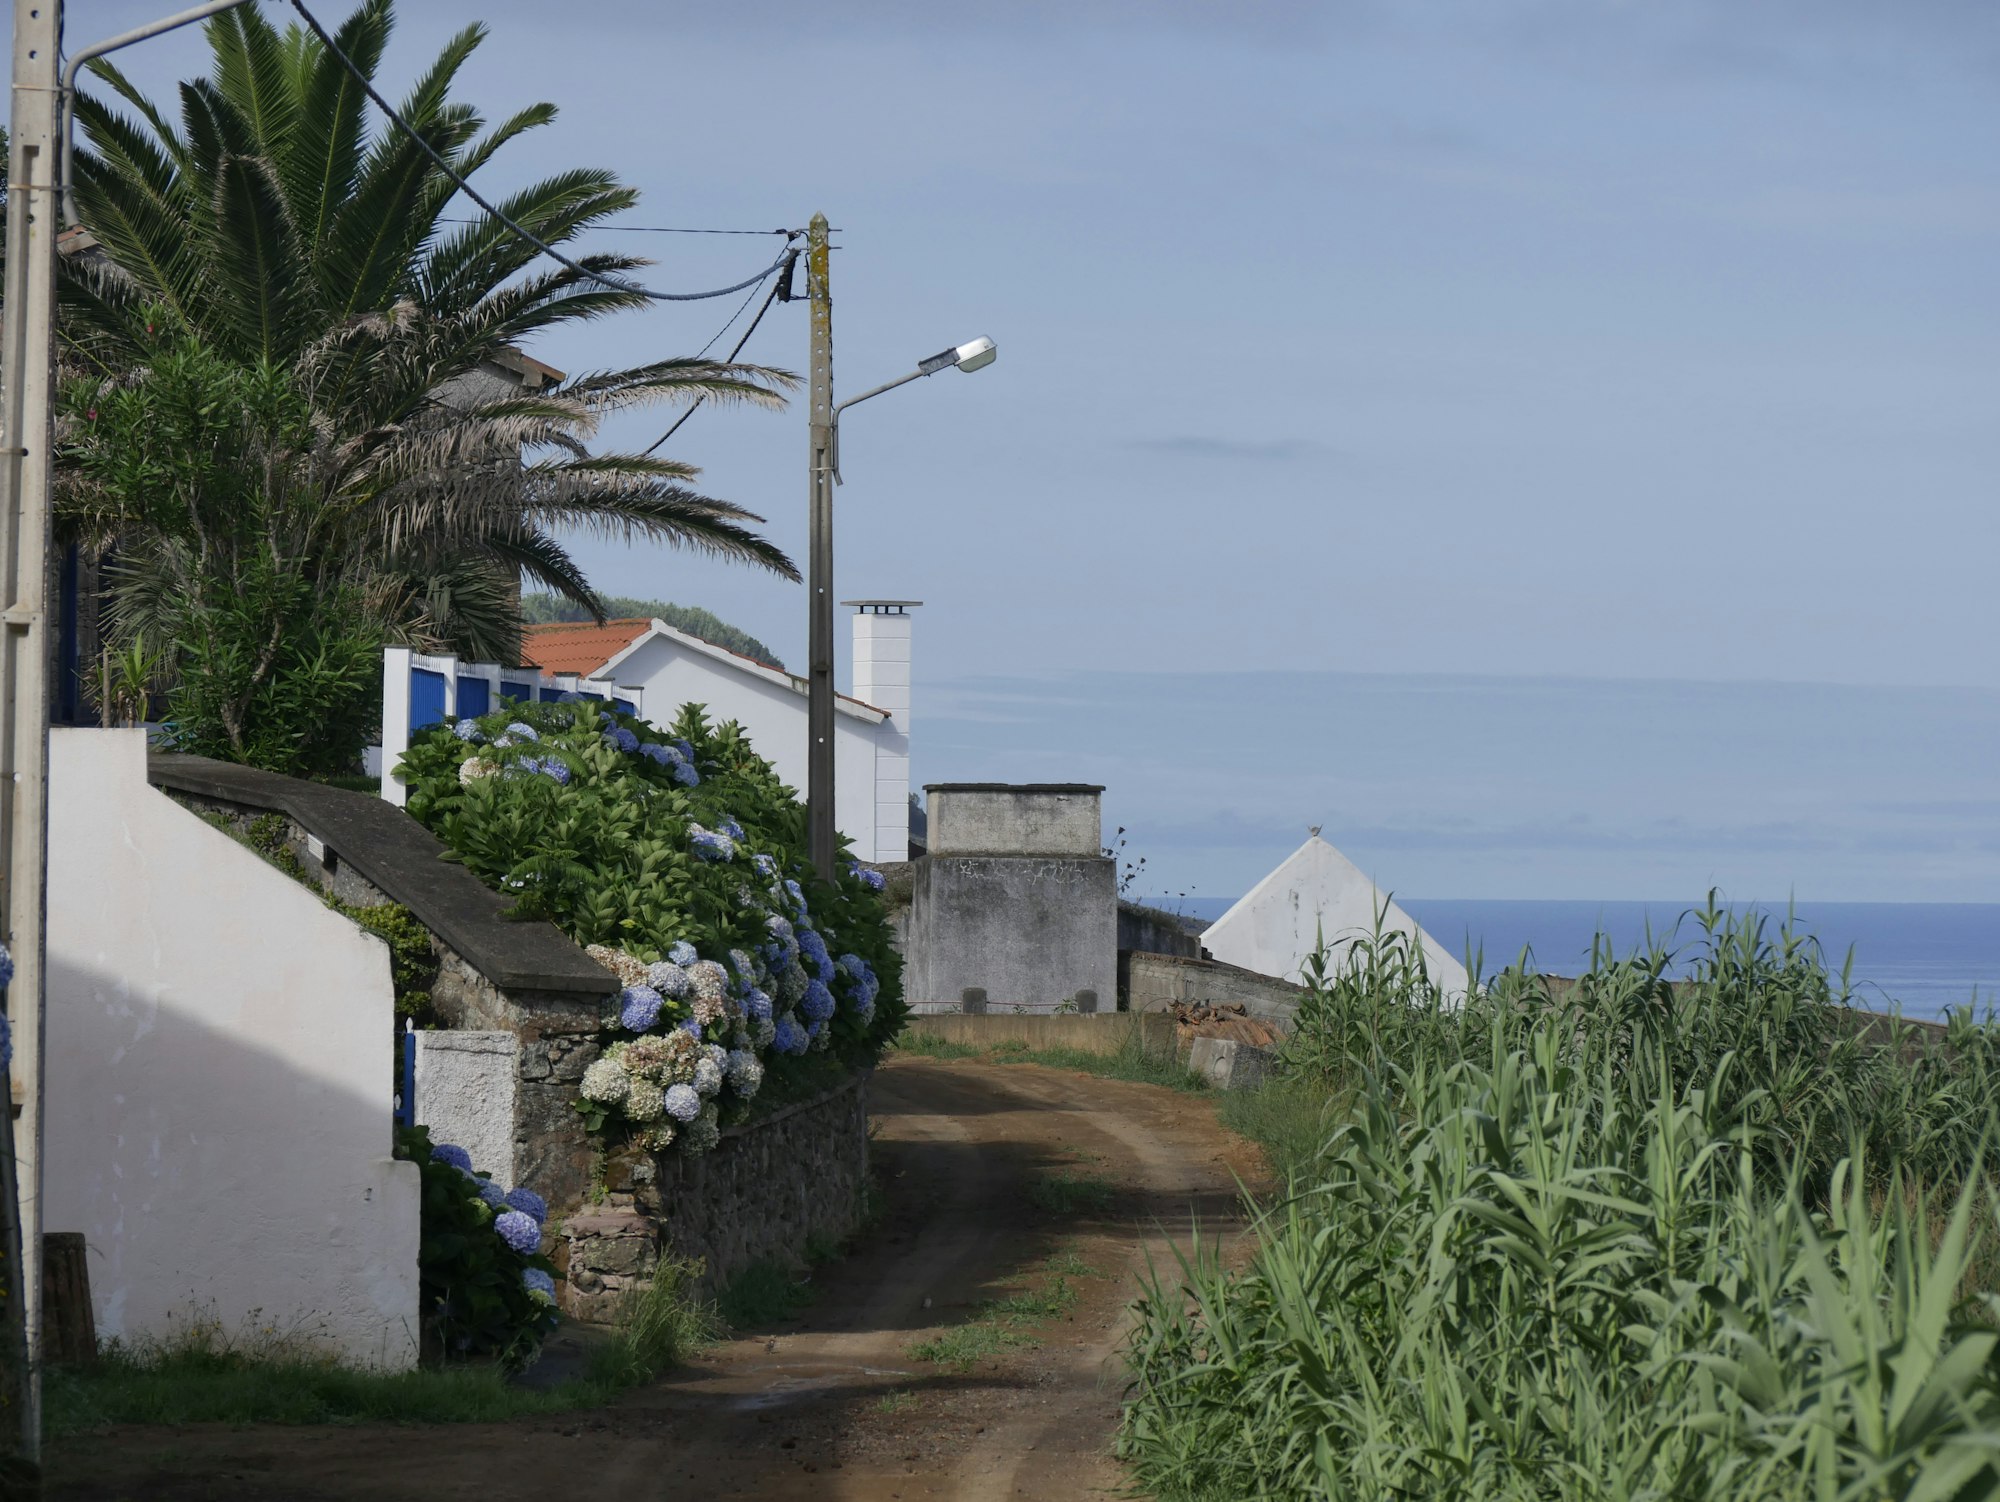 Small road overlooking the ocean.